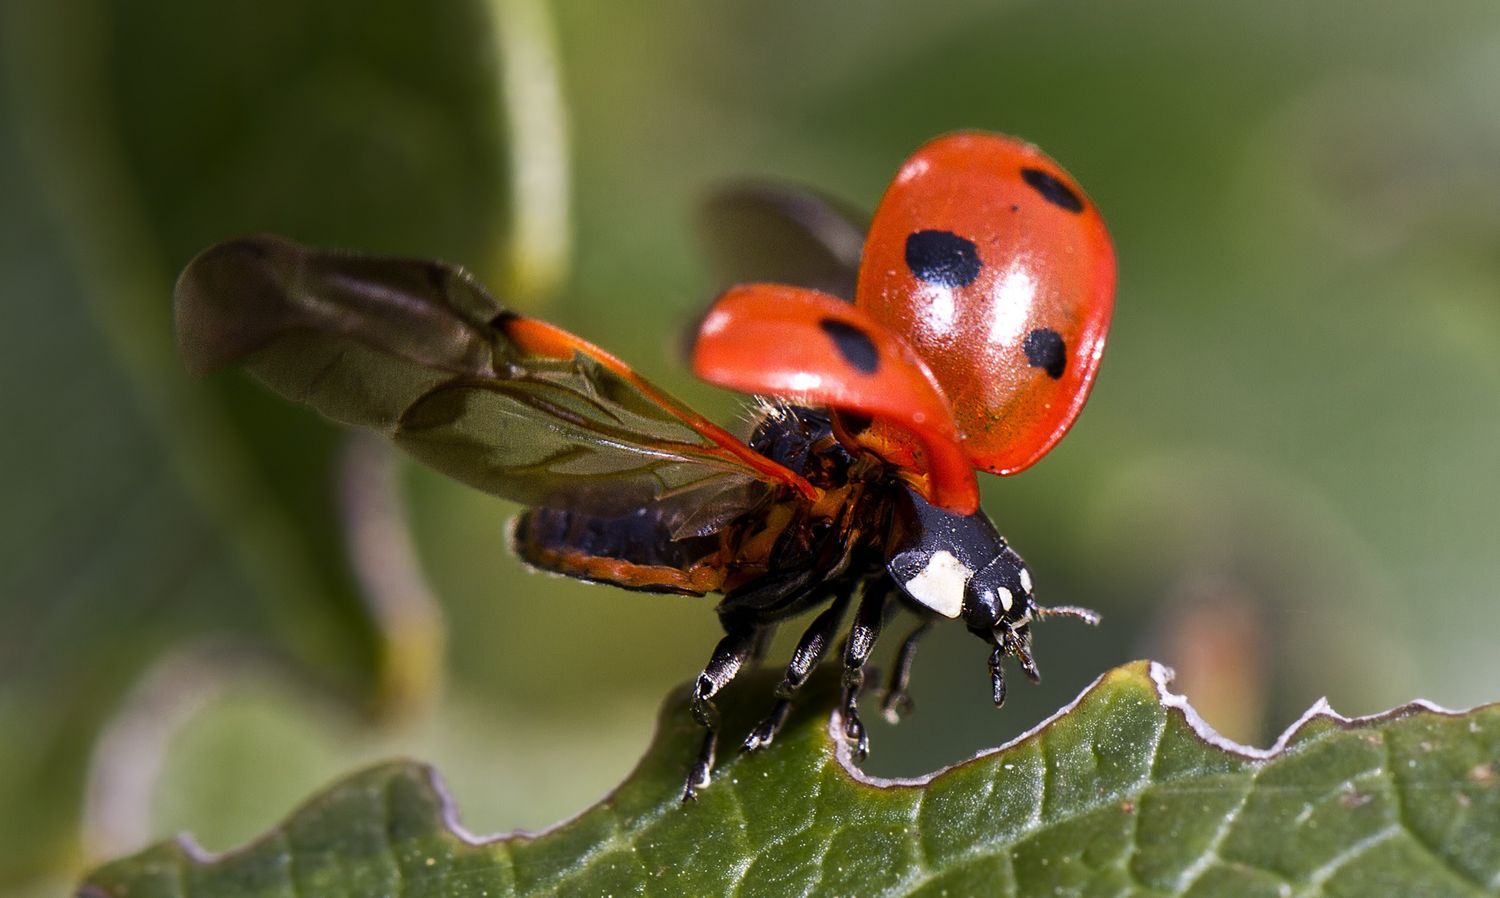 Japanese scientists have unraveled the secret of ladybugs